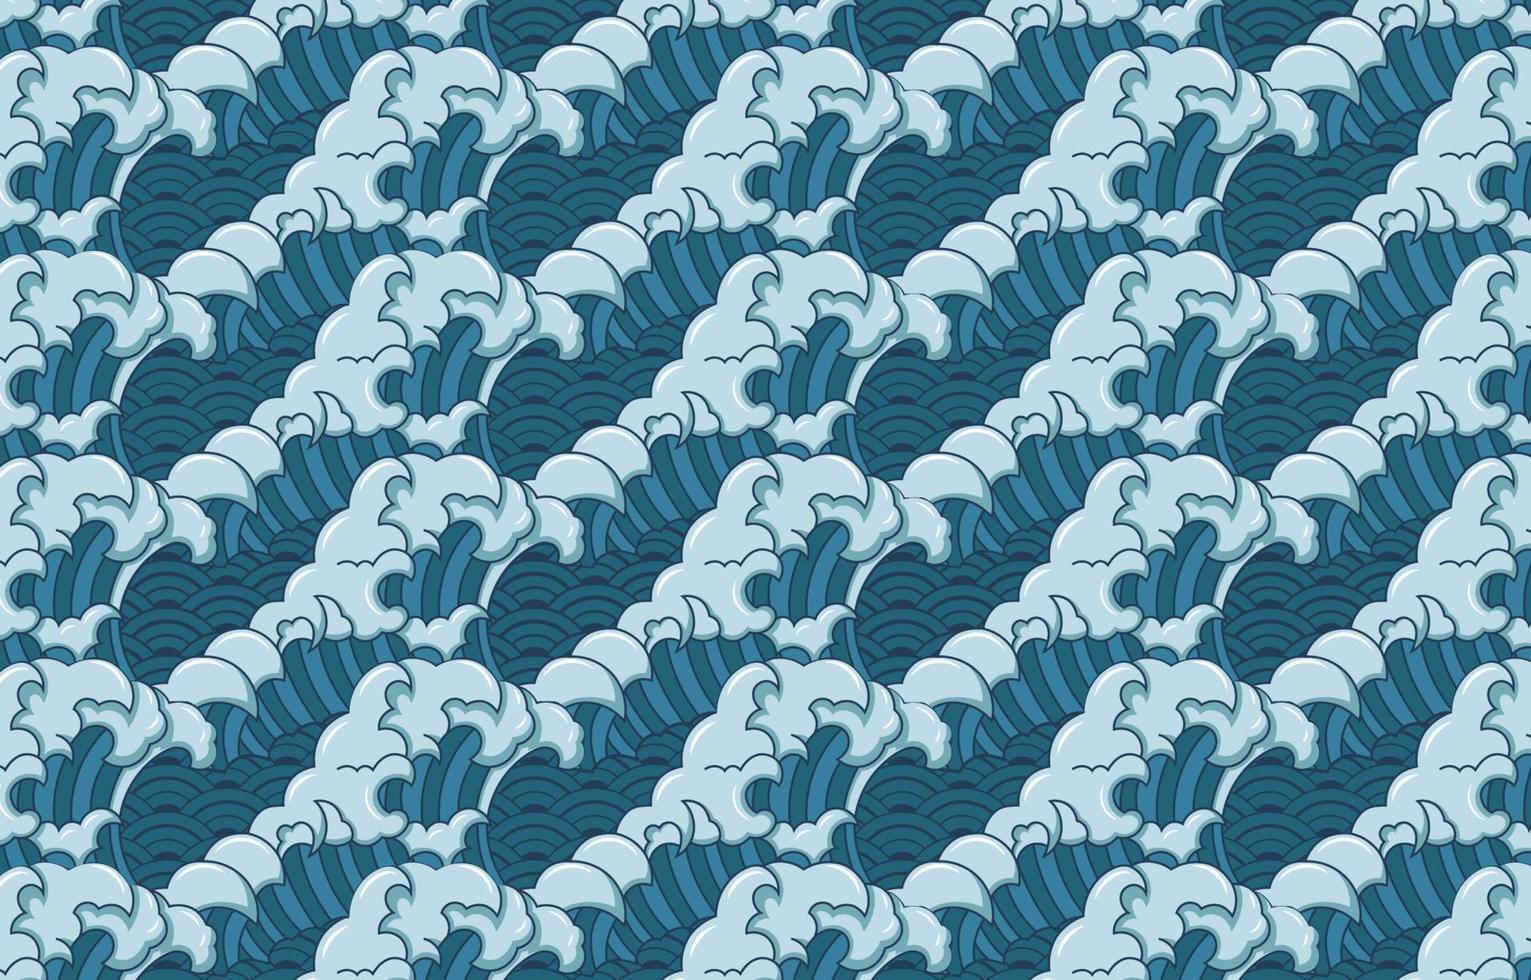 Japanese Wave Patterns Background vector